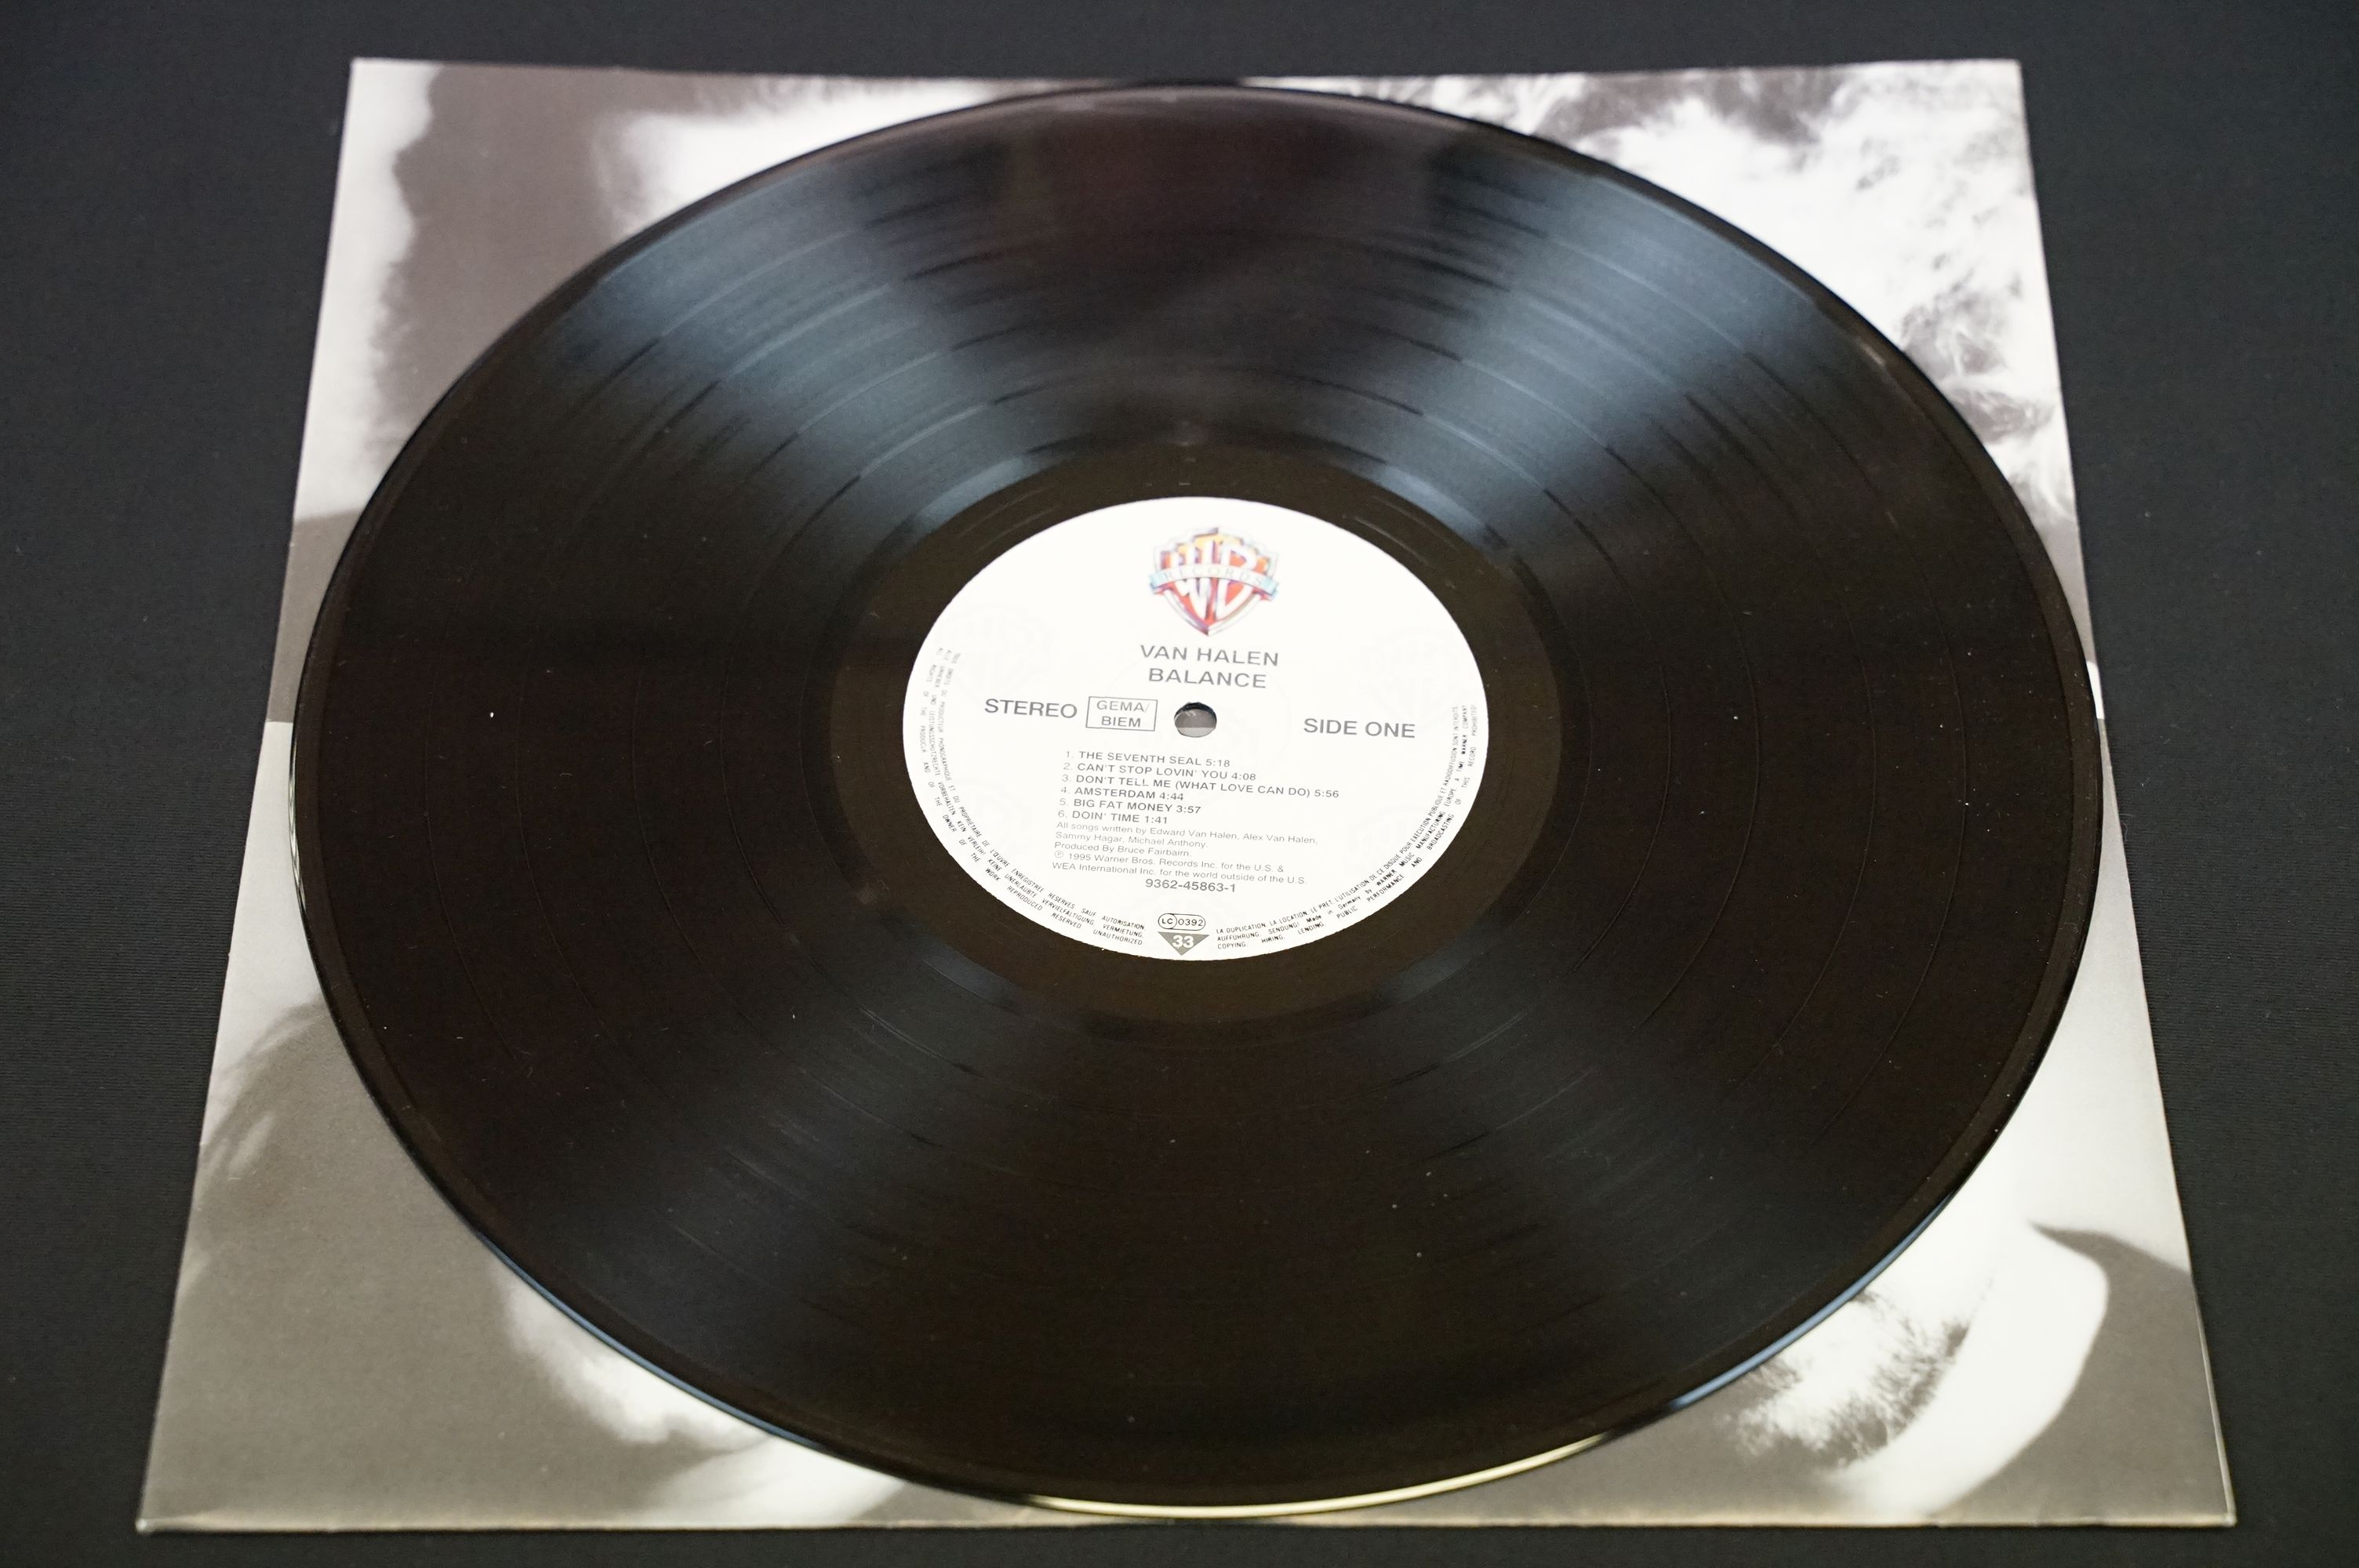 Vinyl - Van Halen – Balance. Original UK / EU 1995 1st pressing on Warner Bros. Records 9362-45863-1 - Image 2 of 6